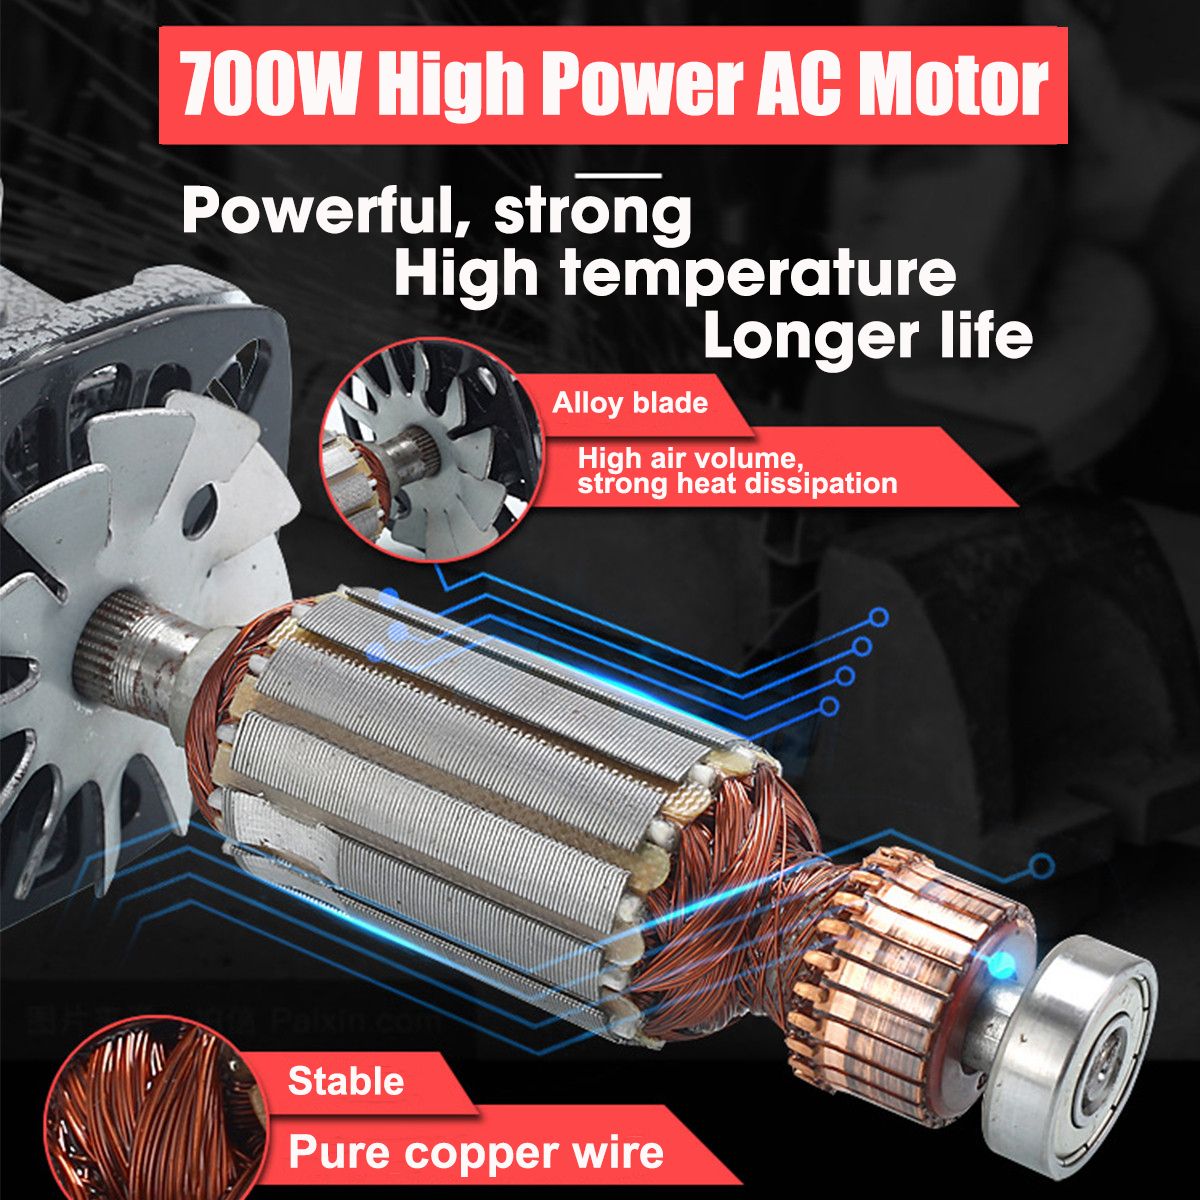 700W-12000rmin-Multifunctional-Power-Angle-Grinder-100mm-Grinding-Cutting-Polishing-Machine-Tool-Ele-1616165